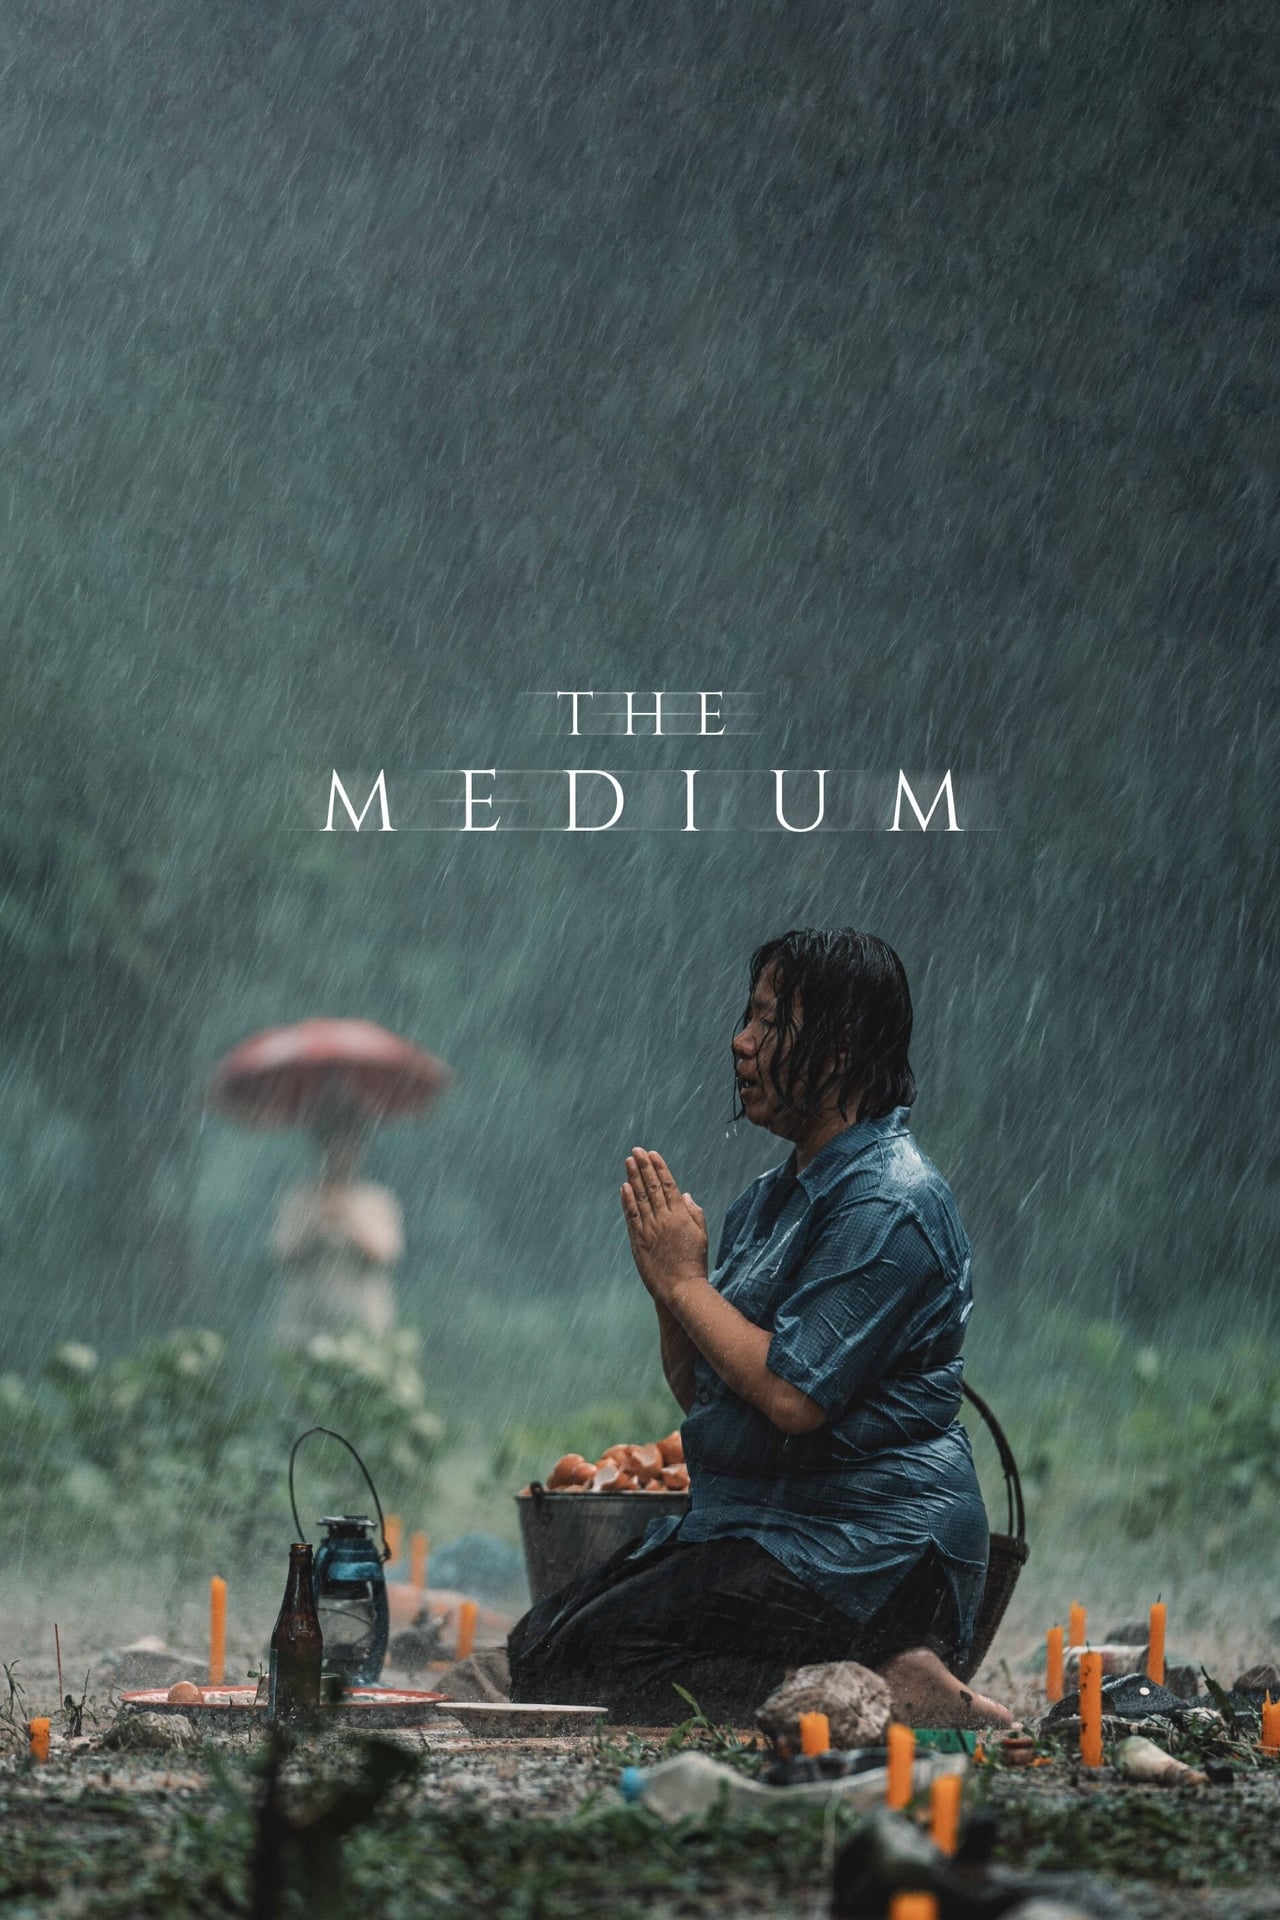 The Medium poster